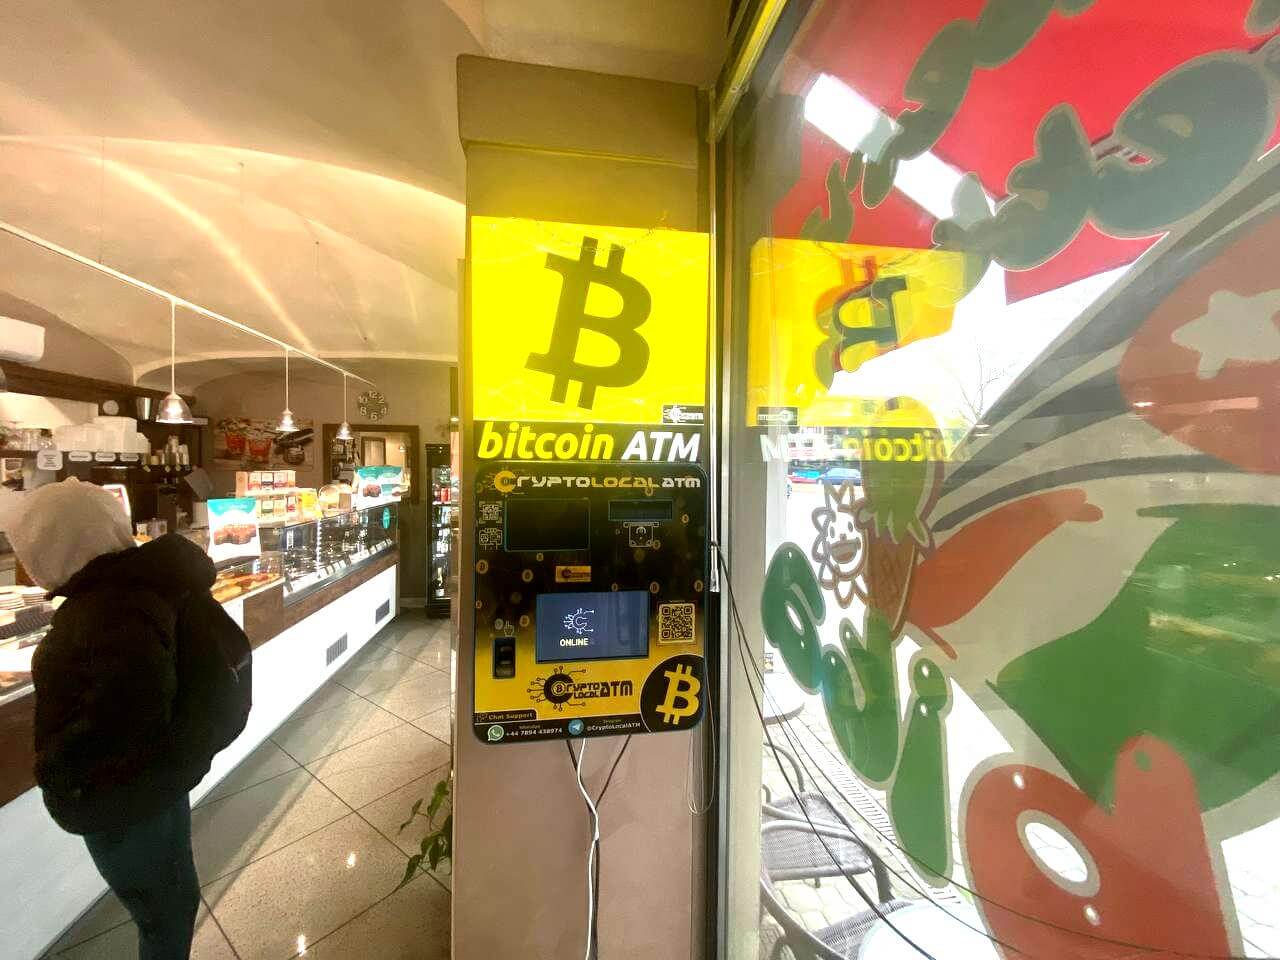 Bitcoin ATM CryptoLocalATM - PARMA blockchain bitcoin